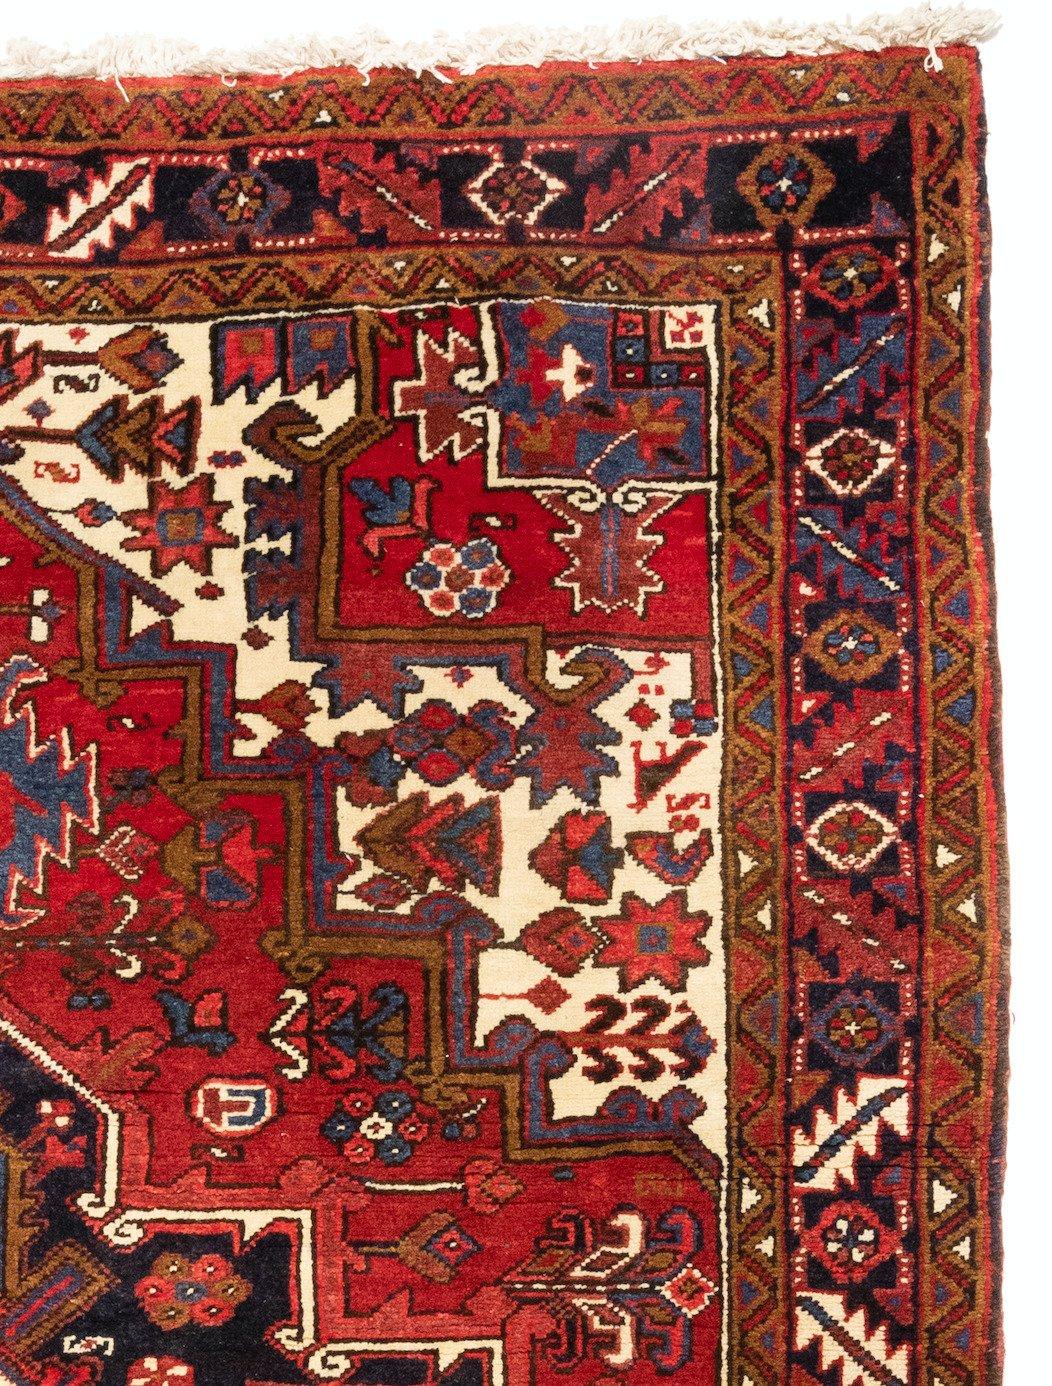 Heriz Serapi Antique Persian Red Ivory and Navy Blue Geometric Tribal Heriz Rug